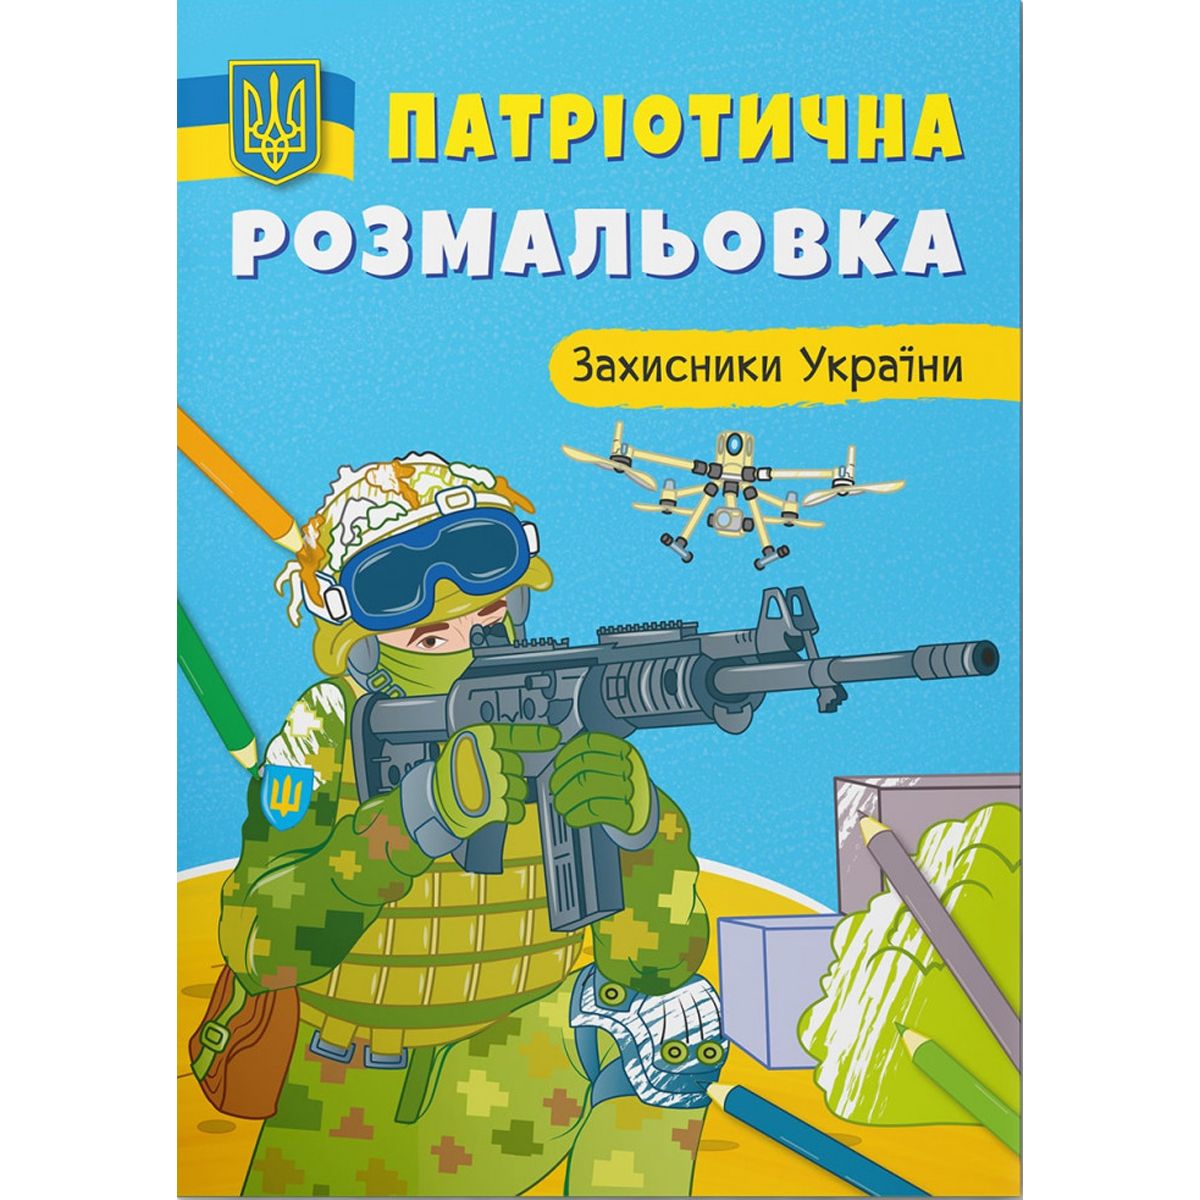 Патріотична розмальовка "Пишаюся бути українцем" (укр)